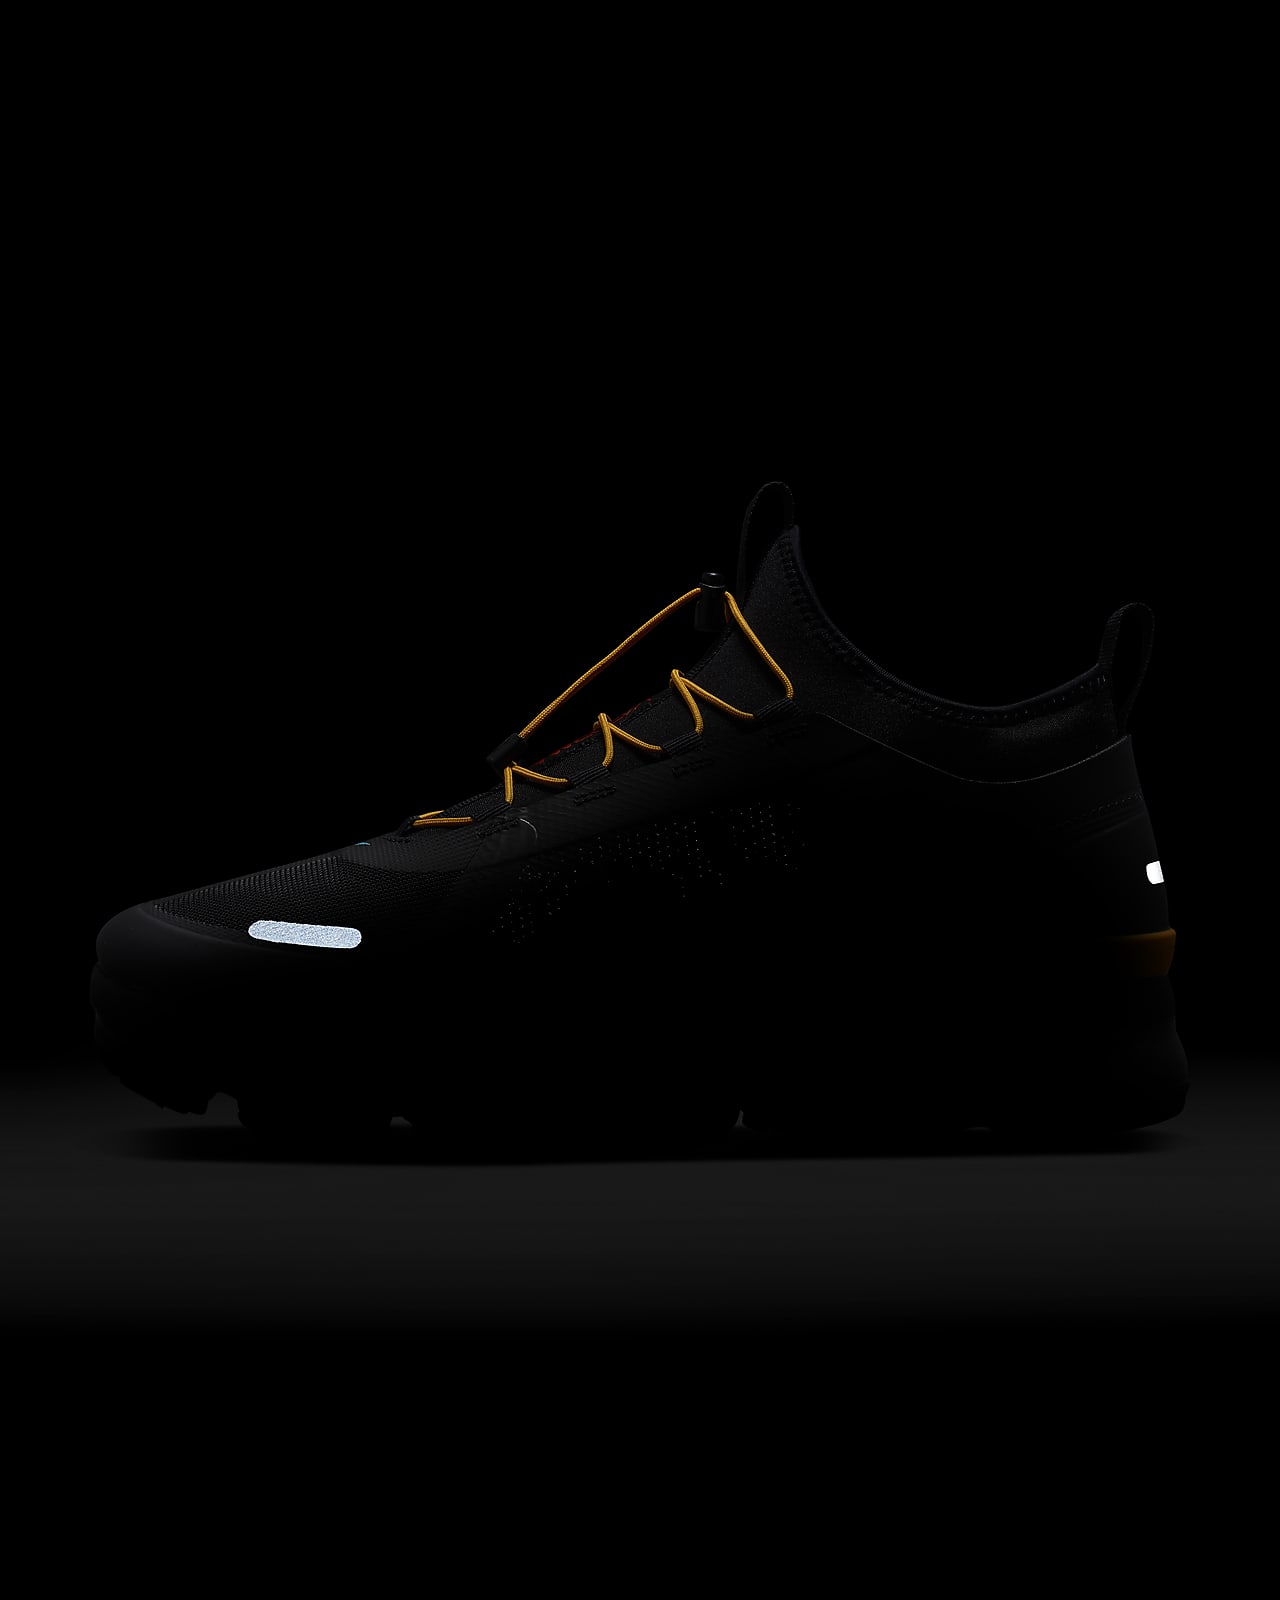 nike air vapormax 2019 utility men's shoes